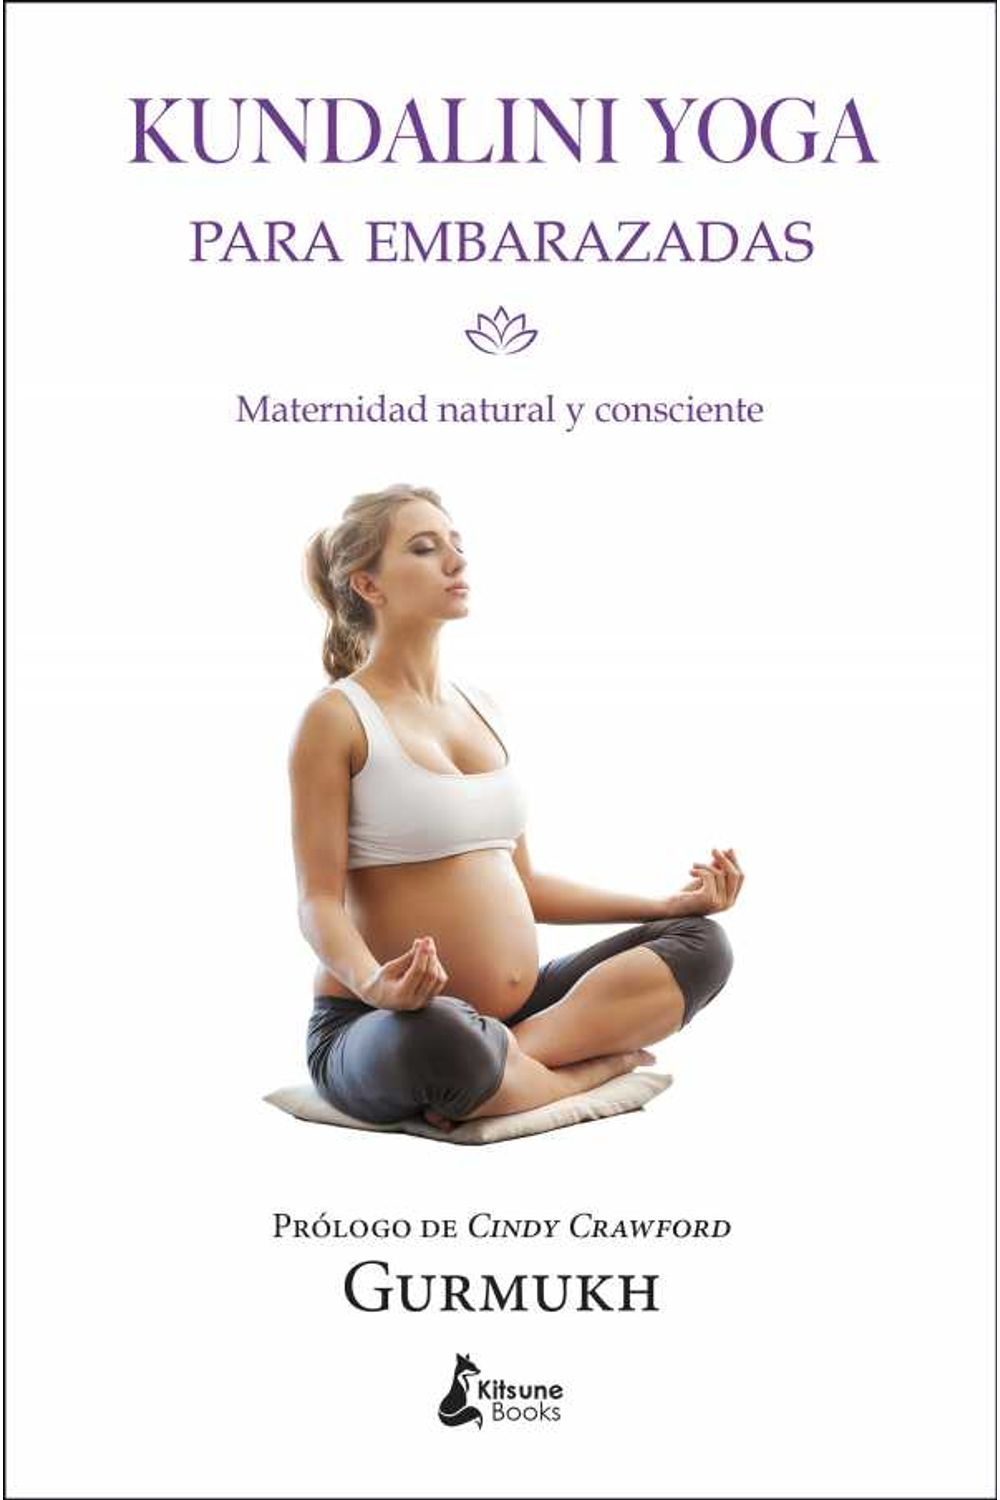 bw-kundalini-yoga-para-embarazadas-kitsune-books-9788416788538